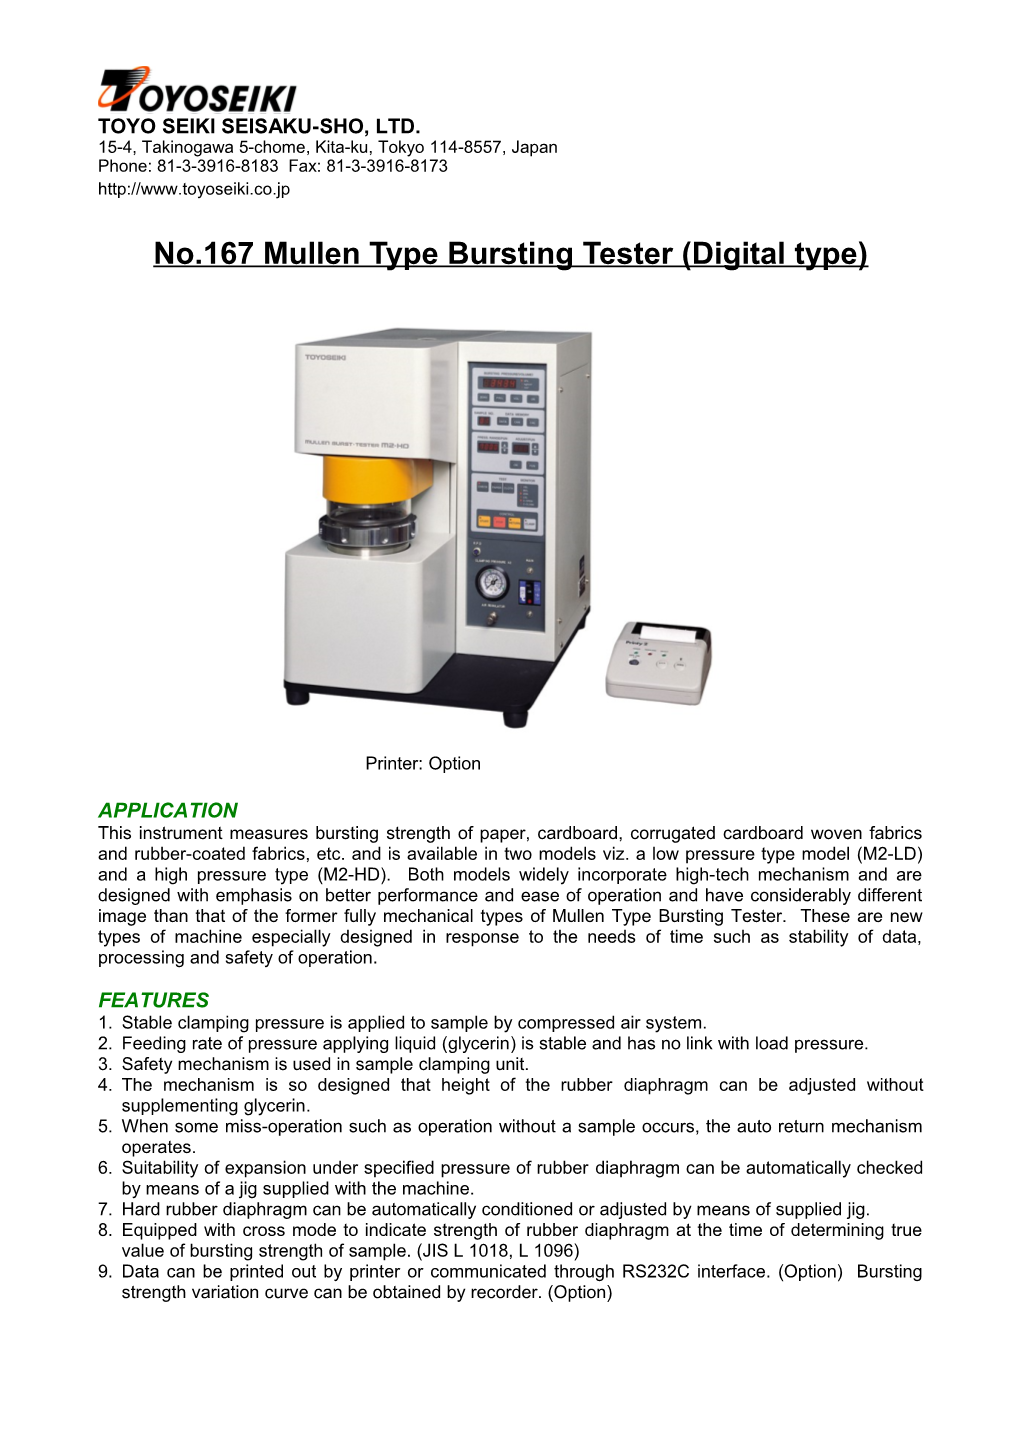 No.167 Mullen Type Bursting Tester (Digital Type)